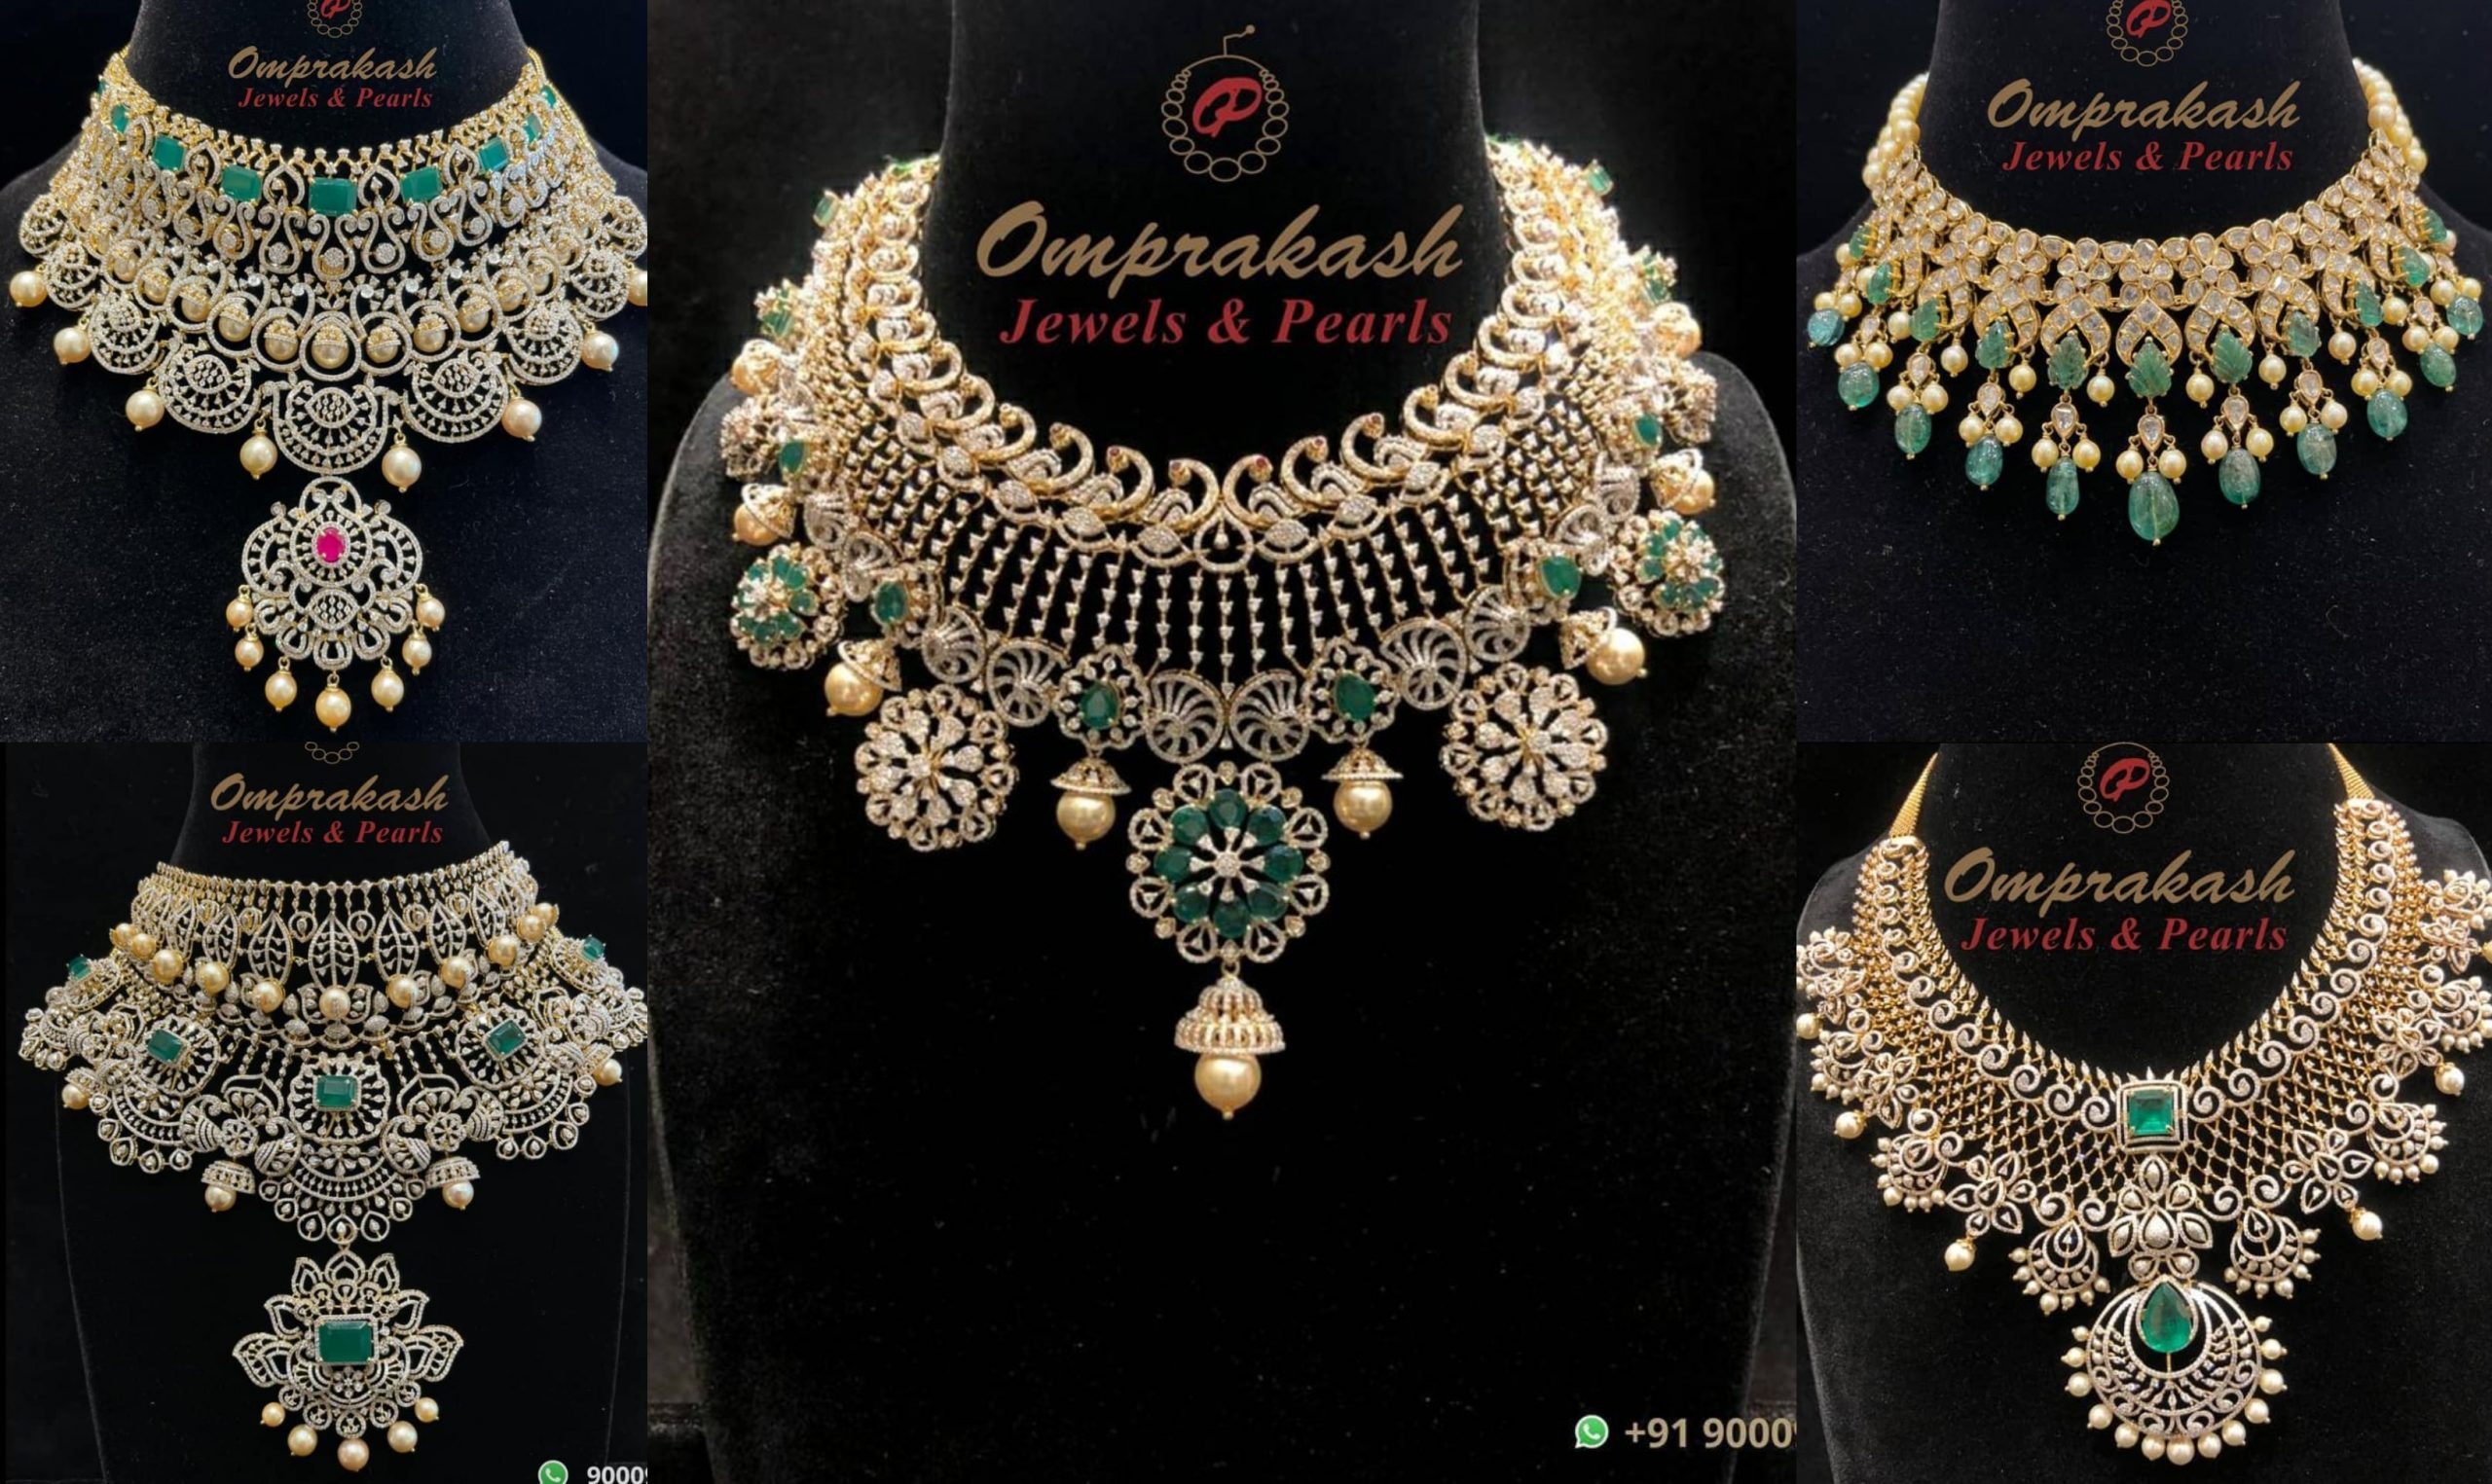 Stunning Diamond Necklaces From Omprakash Jewels